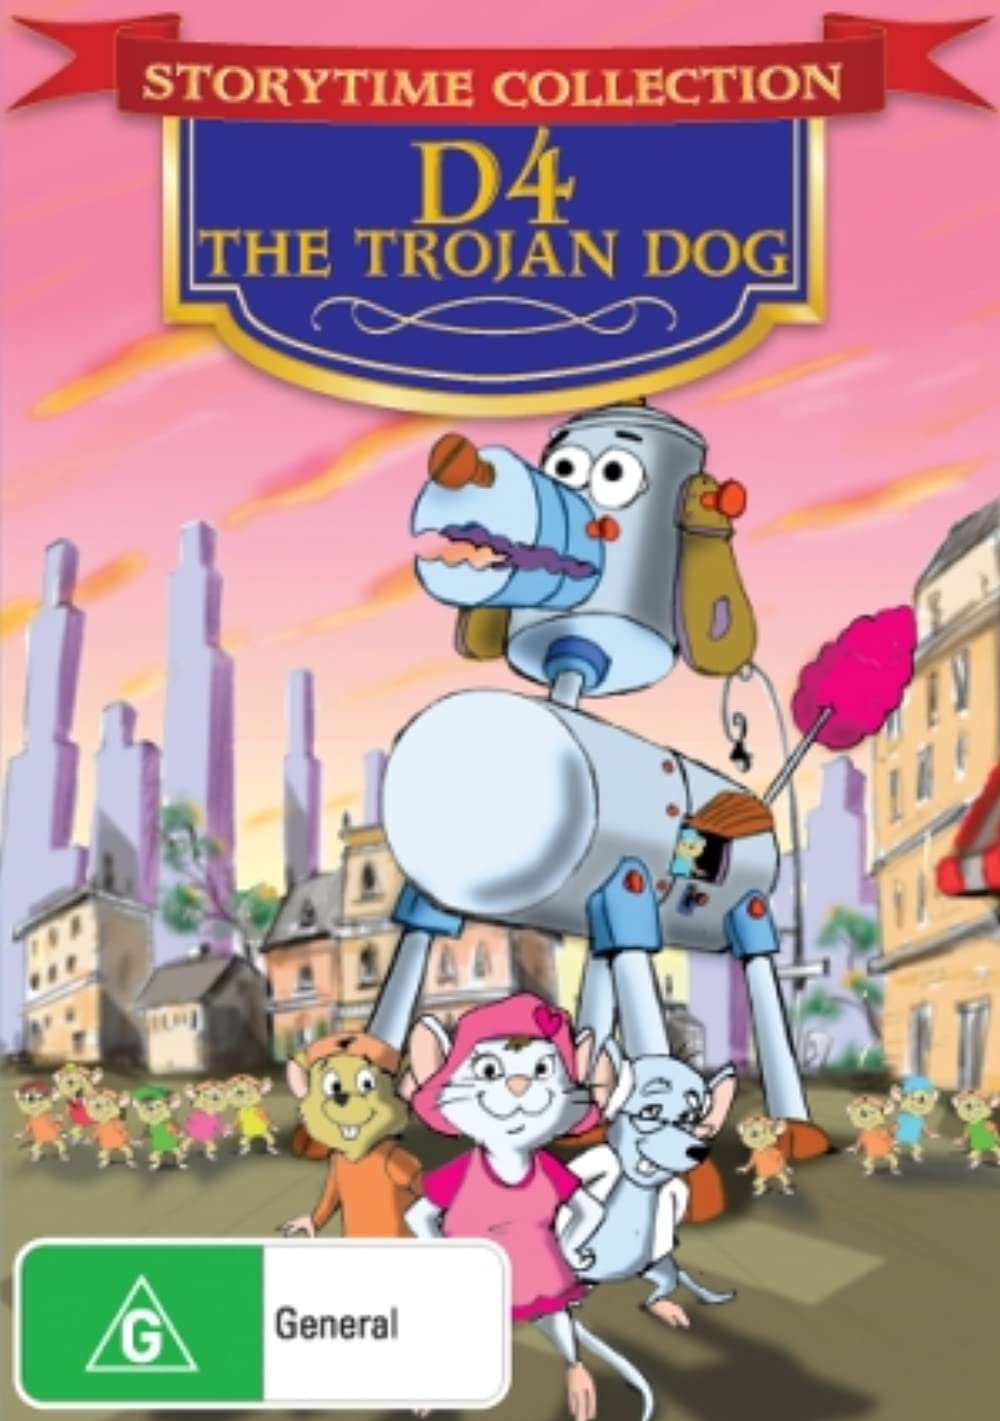 Stiahni si Filmy Kreslené Myska Katka a jeji novi pratele / Myska Katka a jej novy priatelia / D4: The Trojan Dog (1999)(CZ/SK)[DVDRip] = CSFD 54%